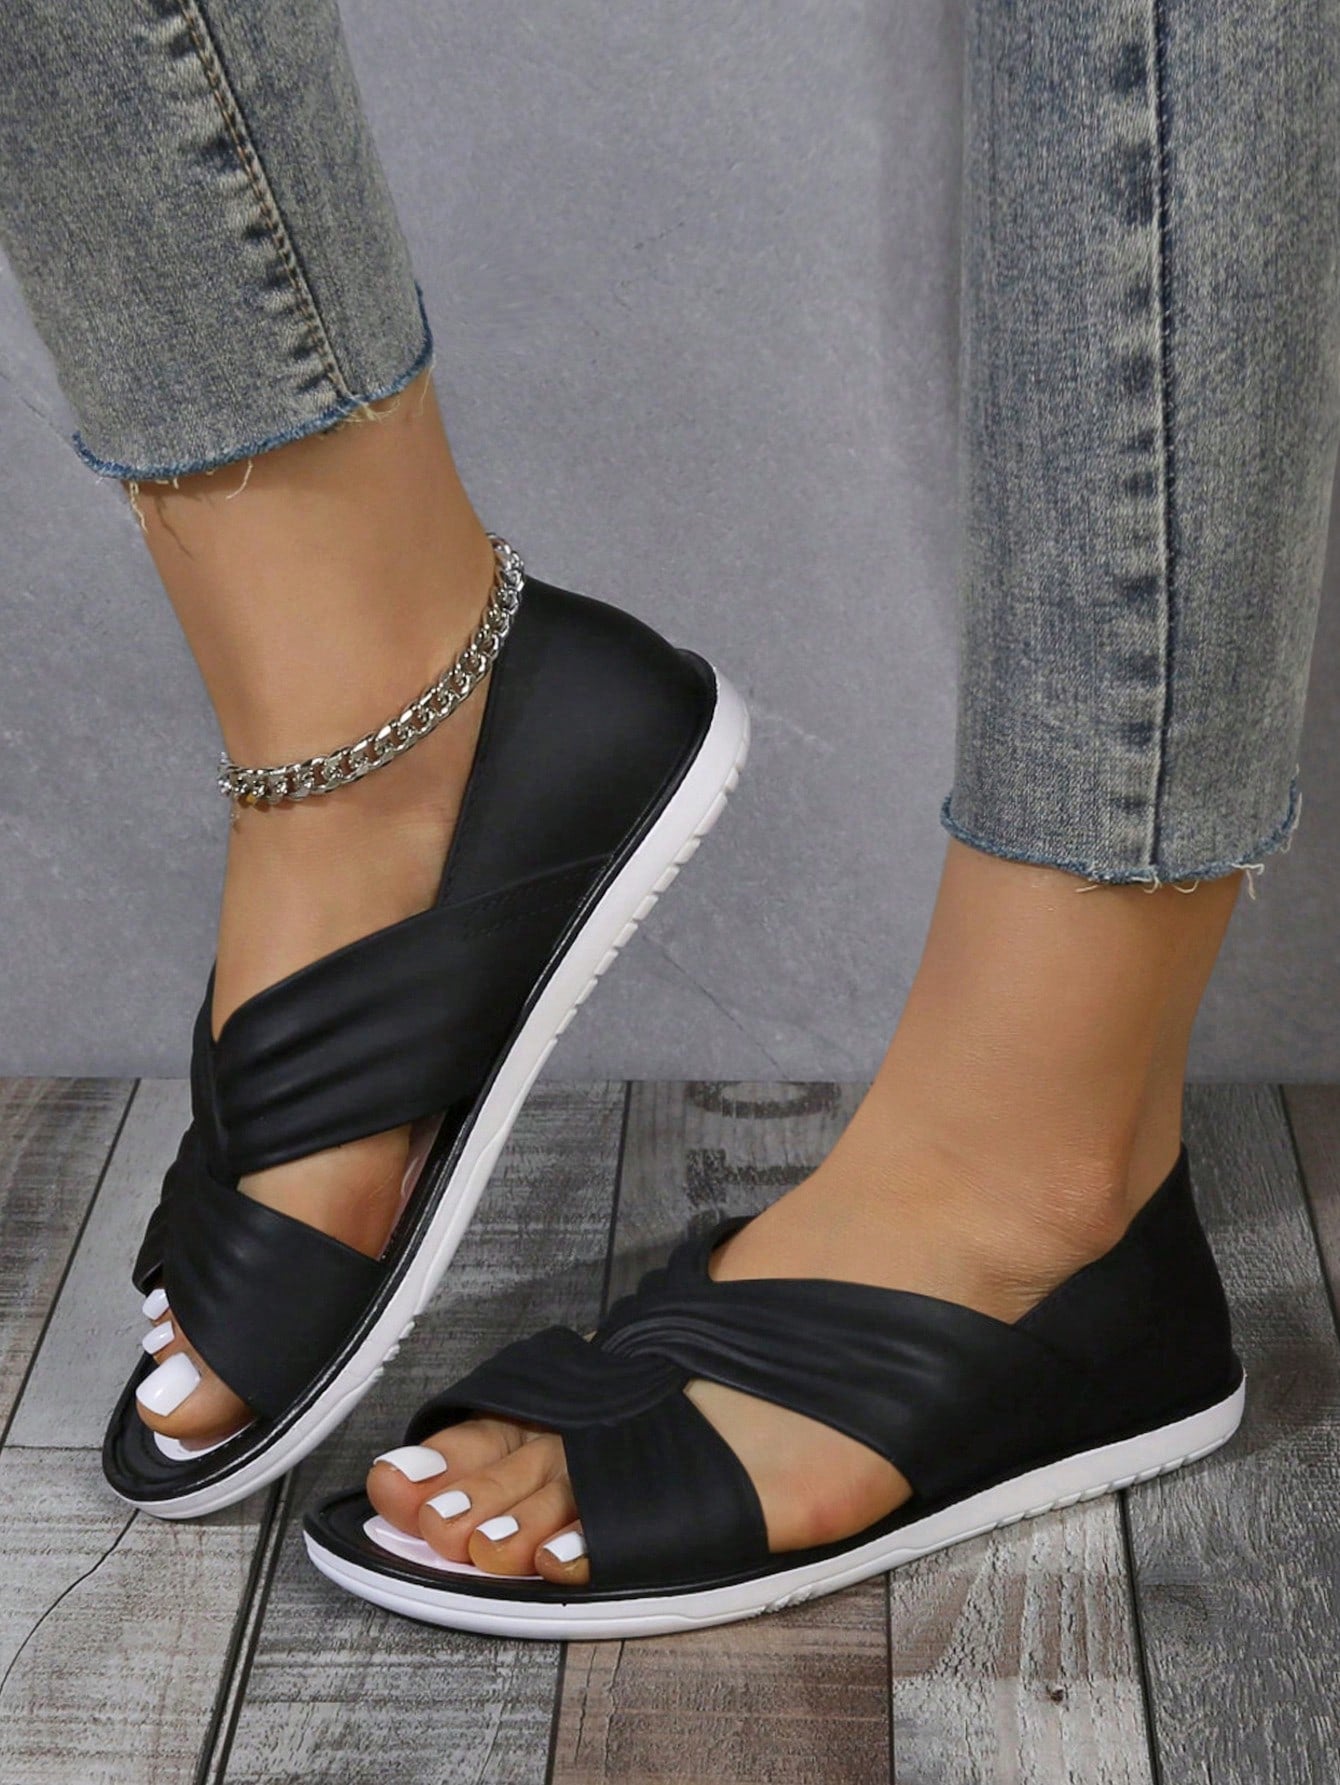 Minimalist Strappy Sandals